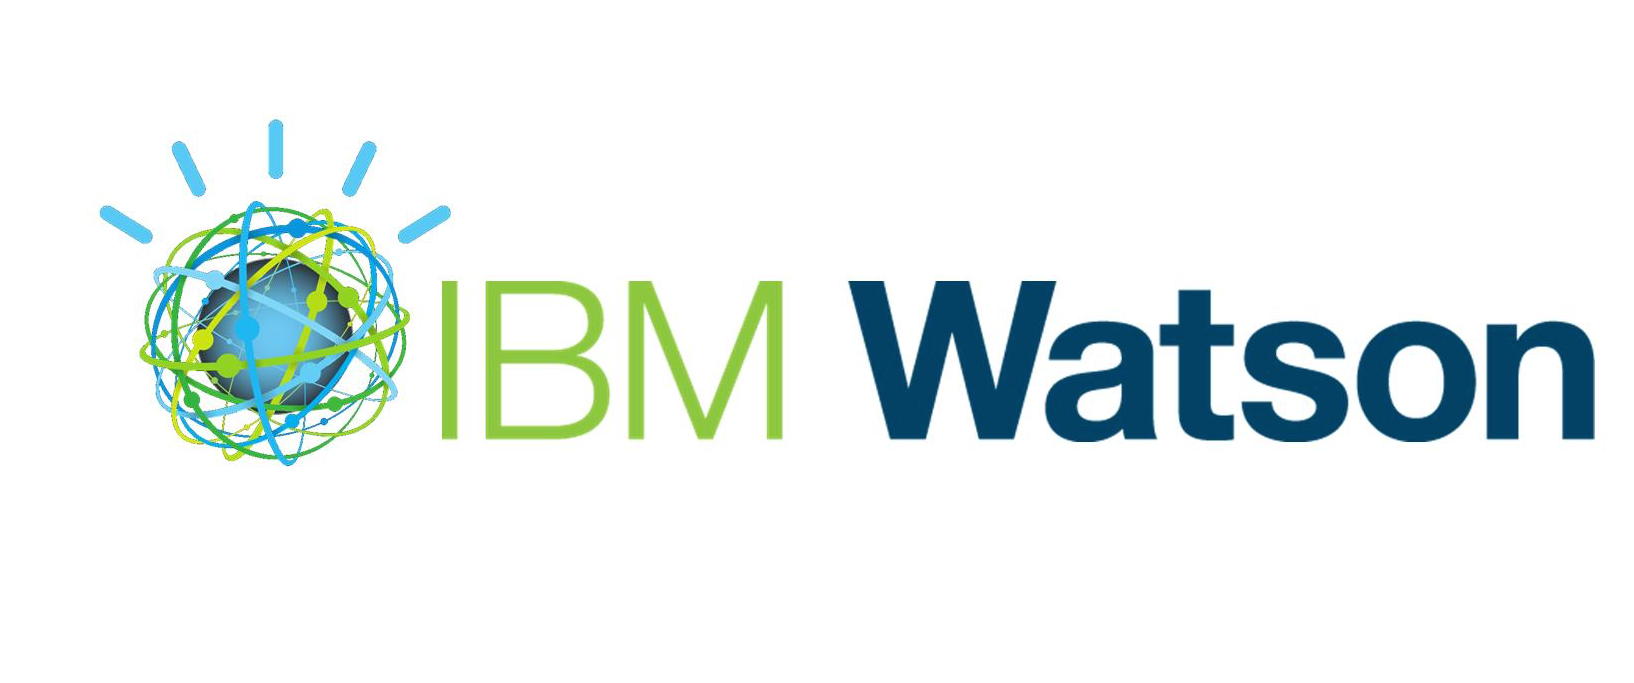 IBM Begins Using Watson AI to Buy Programmatically in the UK